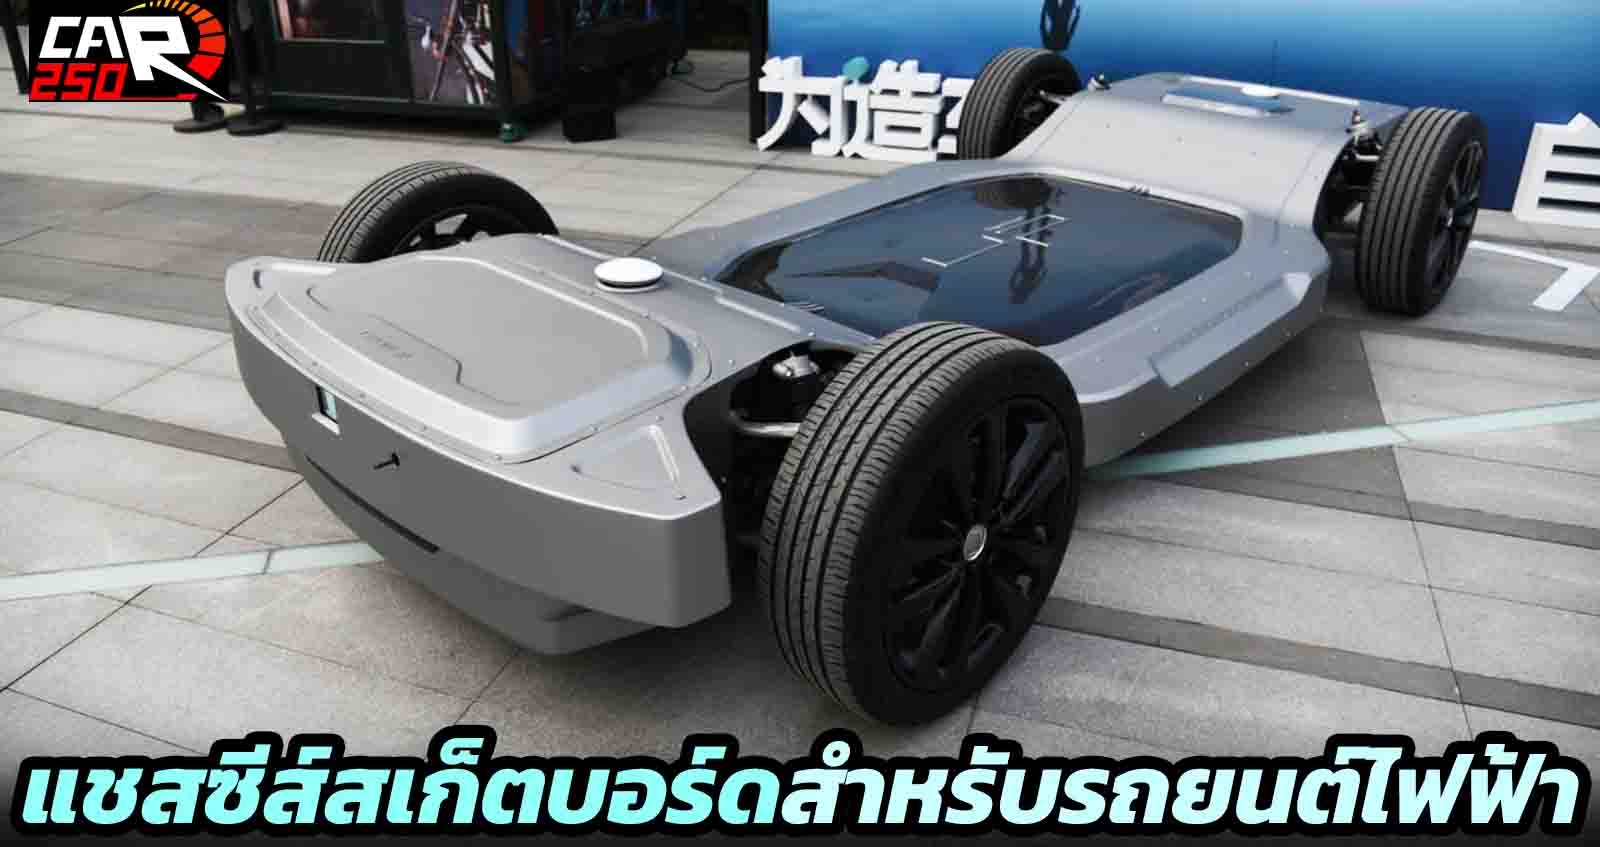 UP Super Chassis แชสซีส์สเก็ตบอร์ด ของจีน